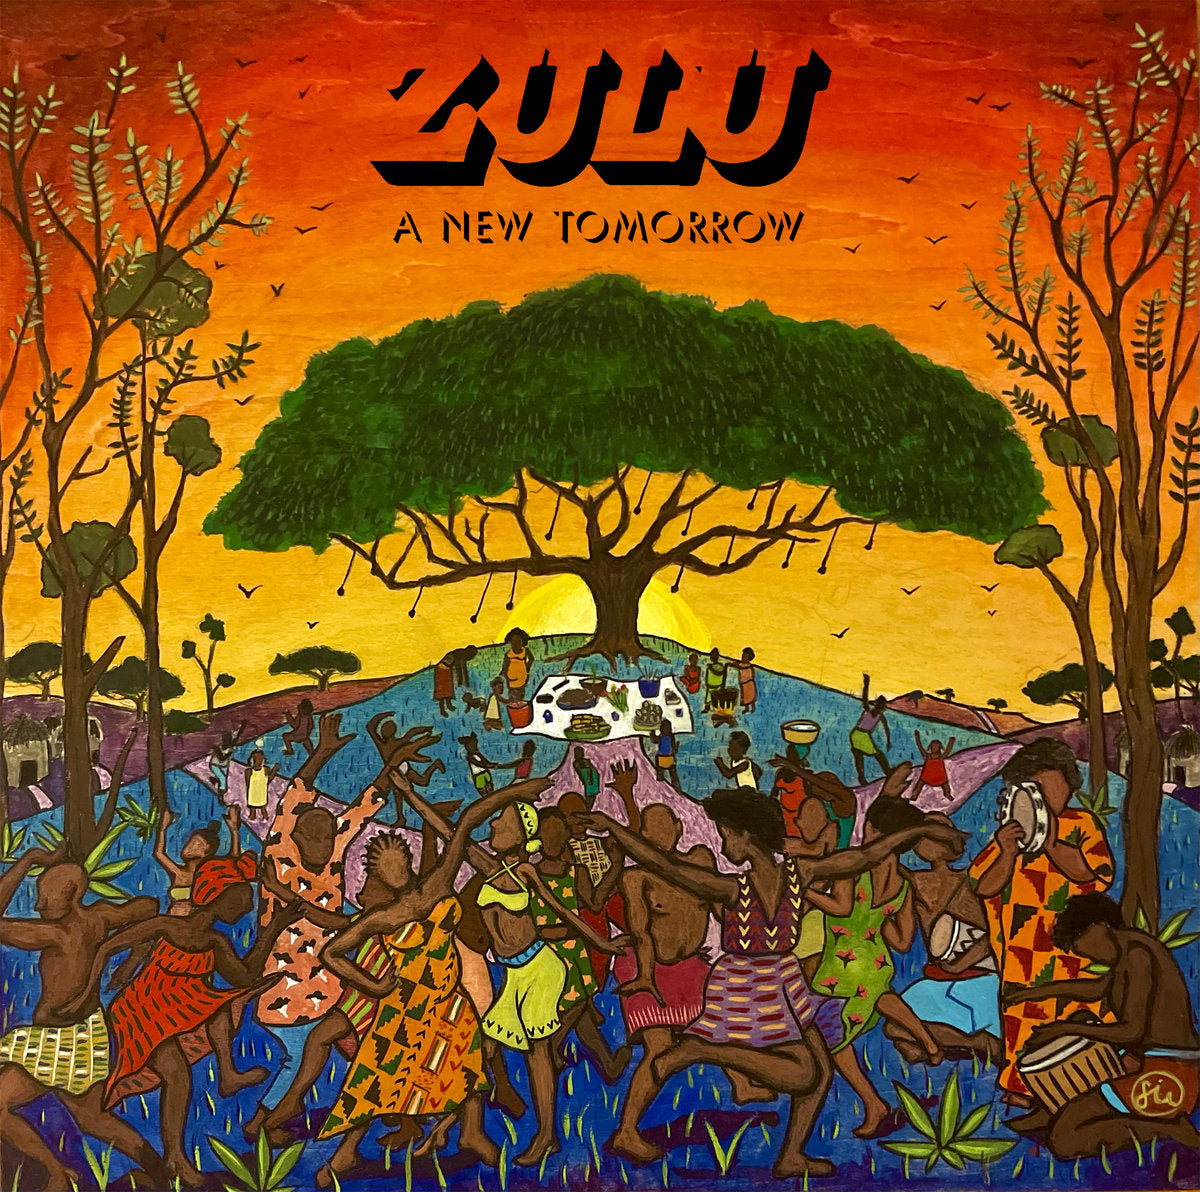 ZULU - A NEW TOMORROW Vinyl LP